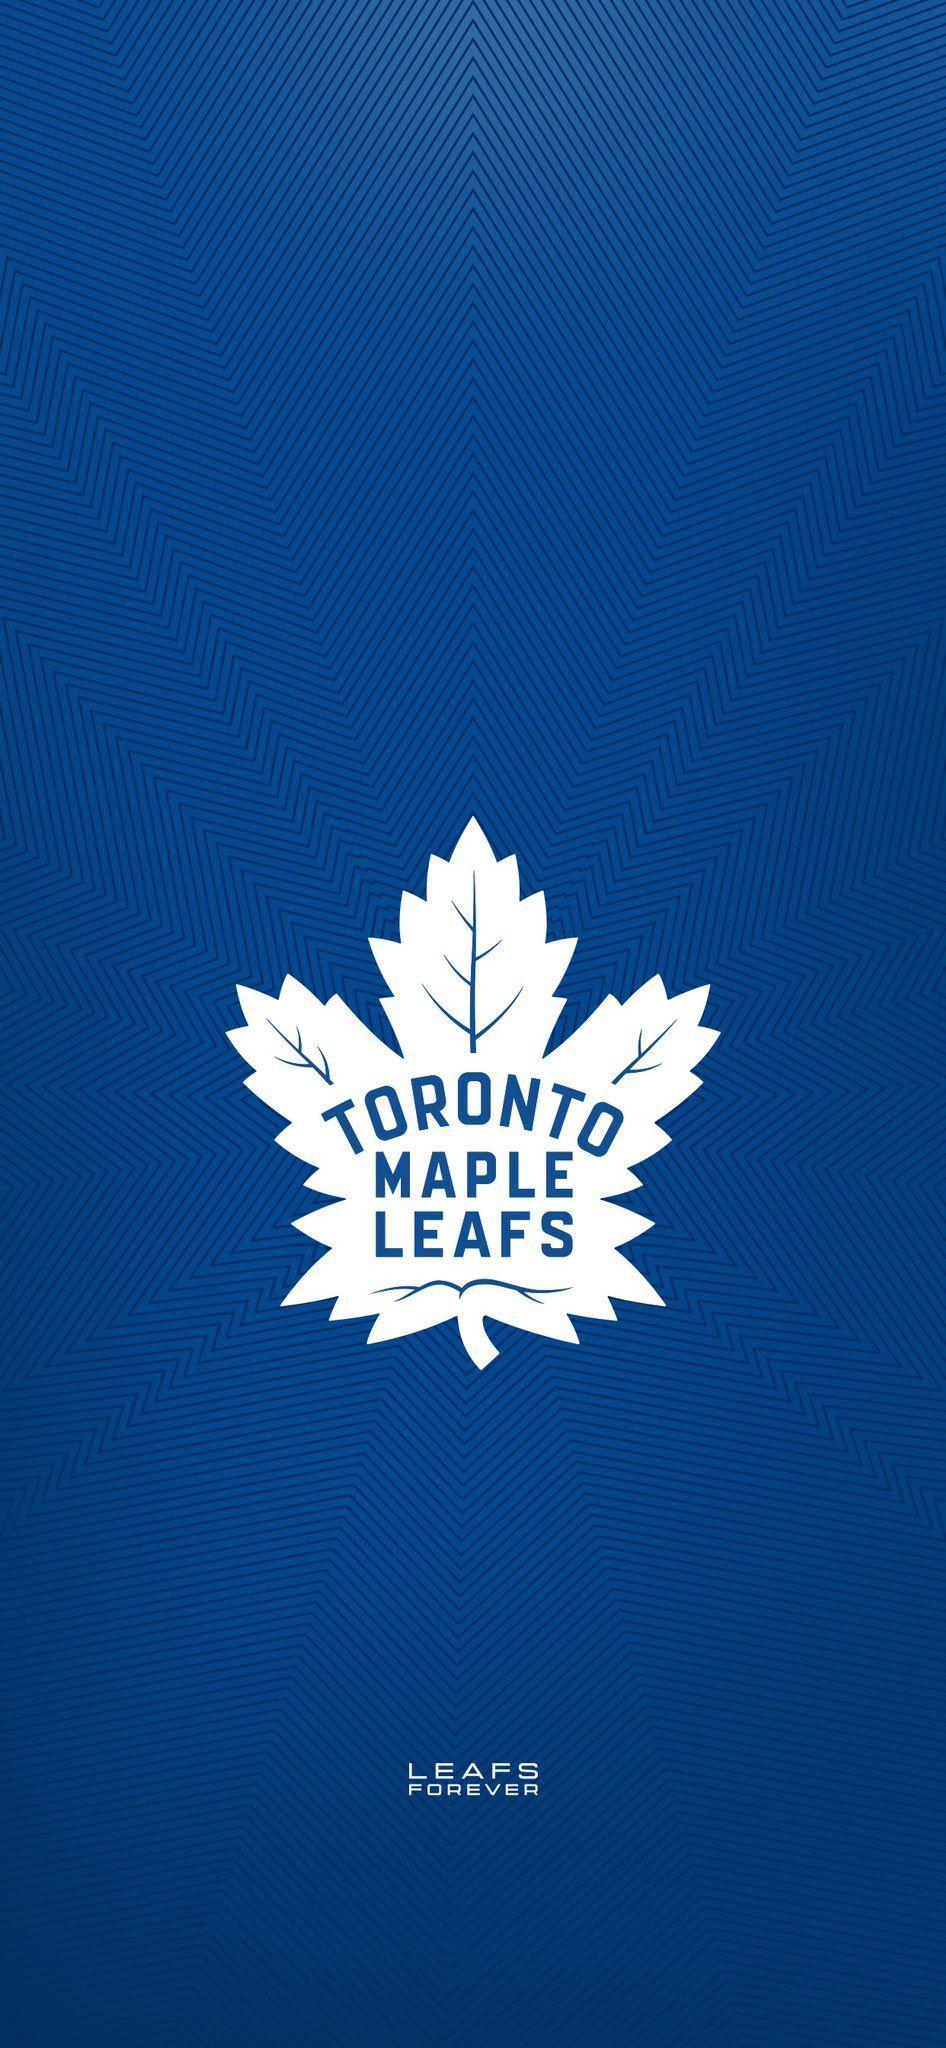 Toronto Maple Leafs iPhone Wallpaper - post - Imgur